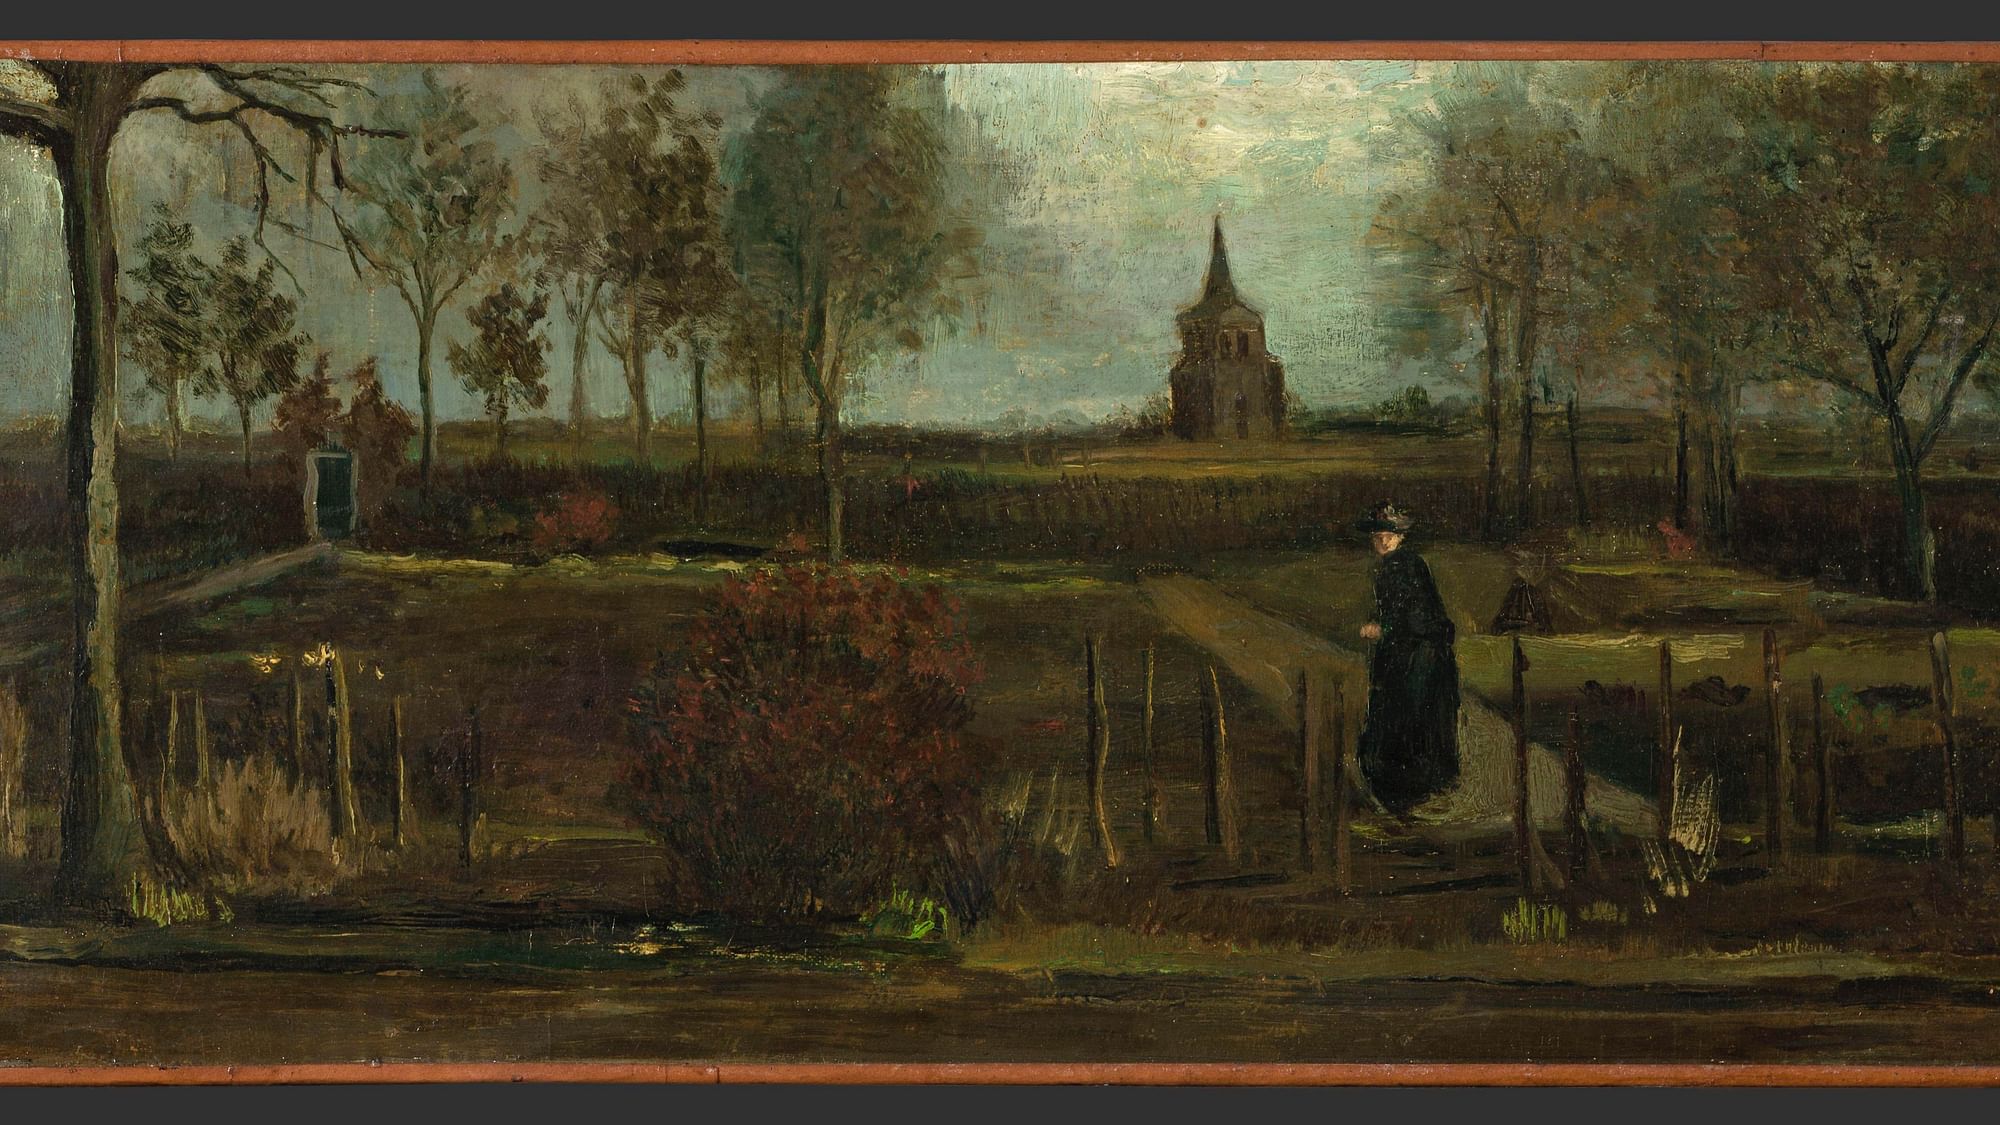  Dutch master Vincent van Gogh’s painting “The Parsonage Garden at Nuenen in Spring”  was stolen from the Singer Museum in Laren, Netherlands.